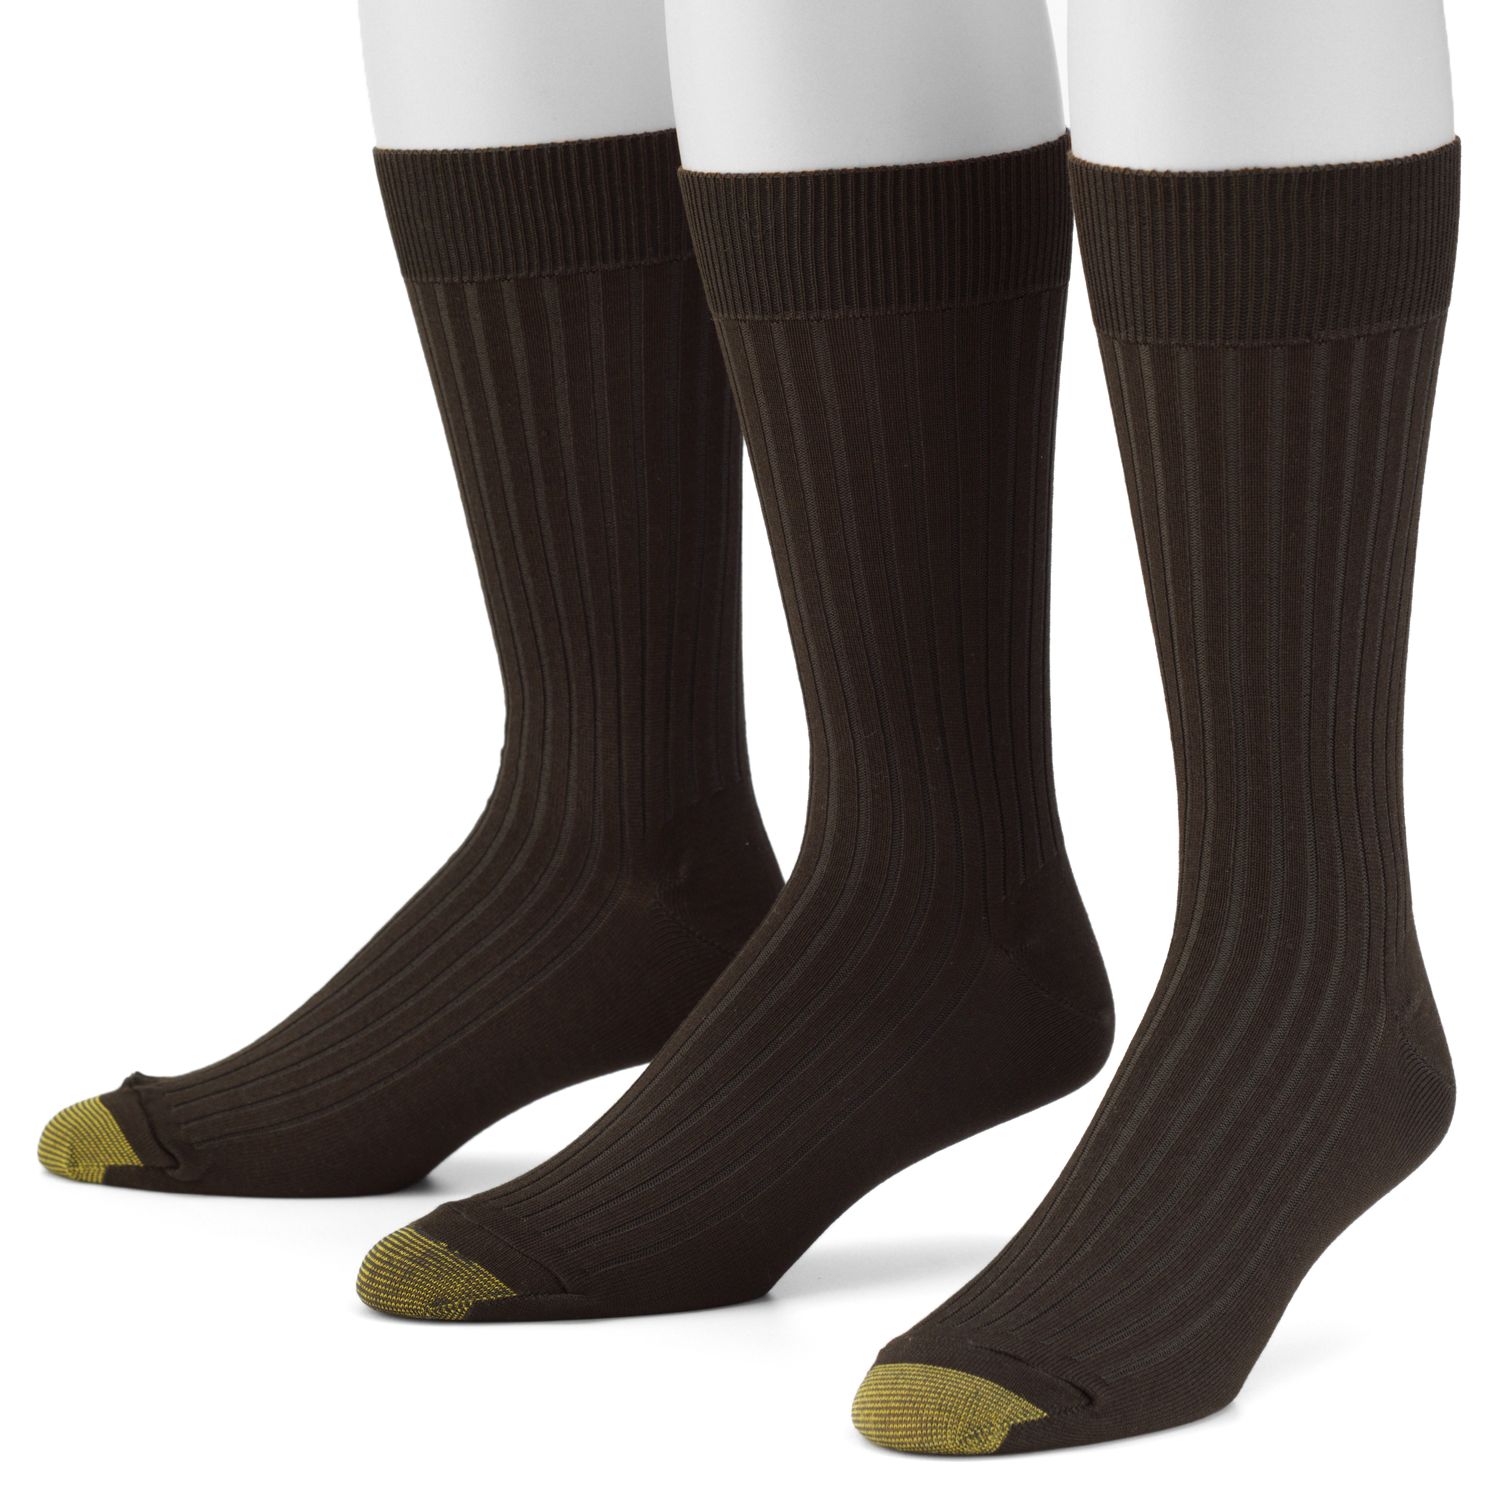 mens stylish dress socks